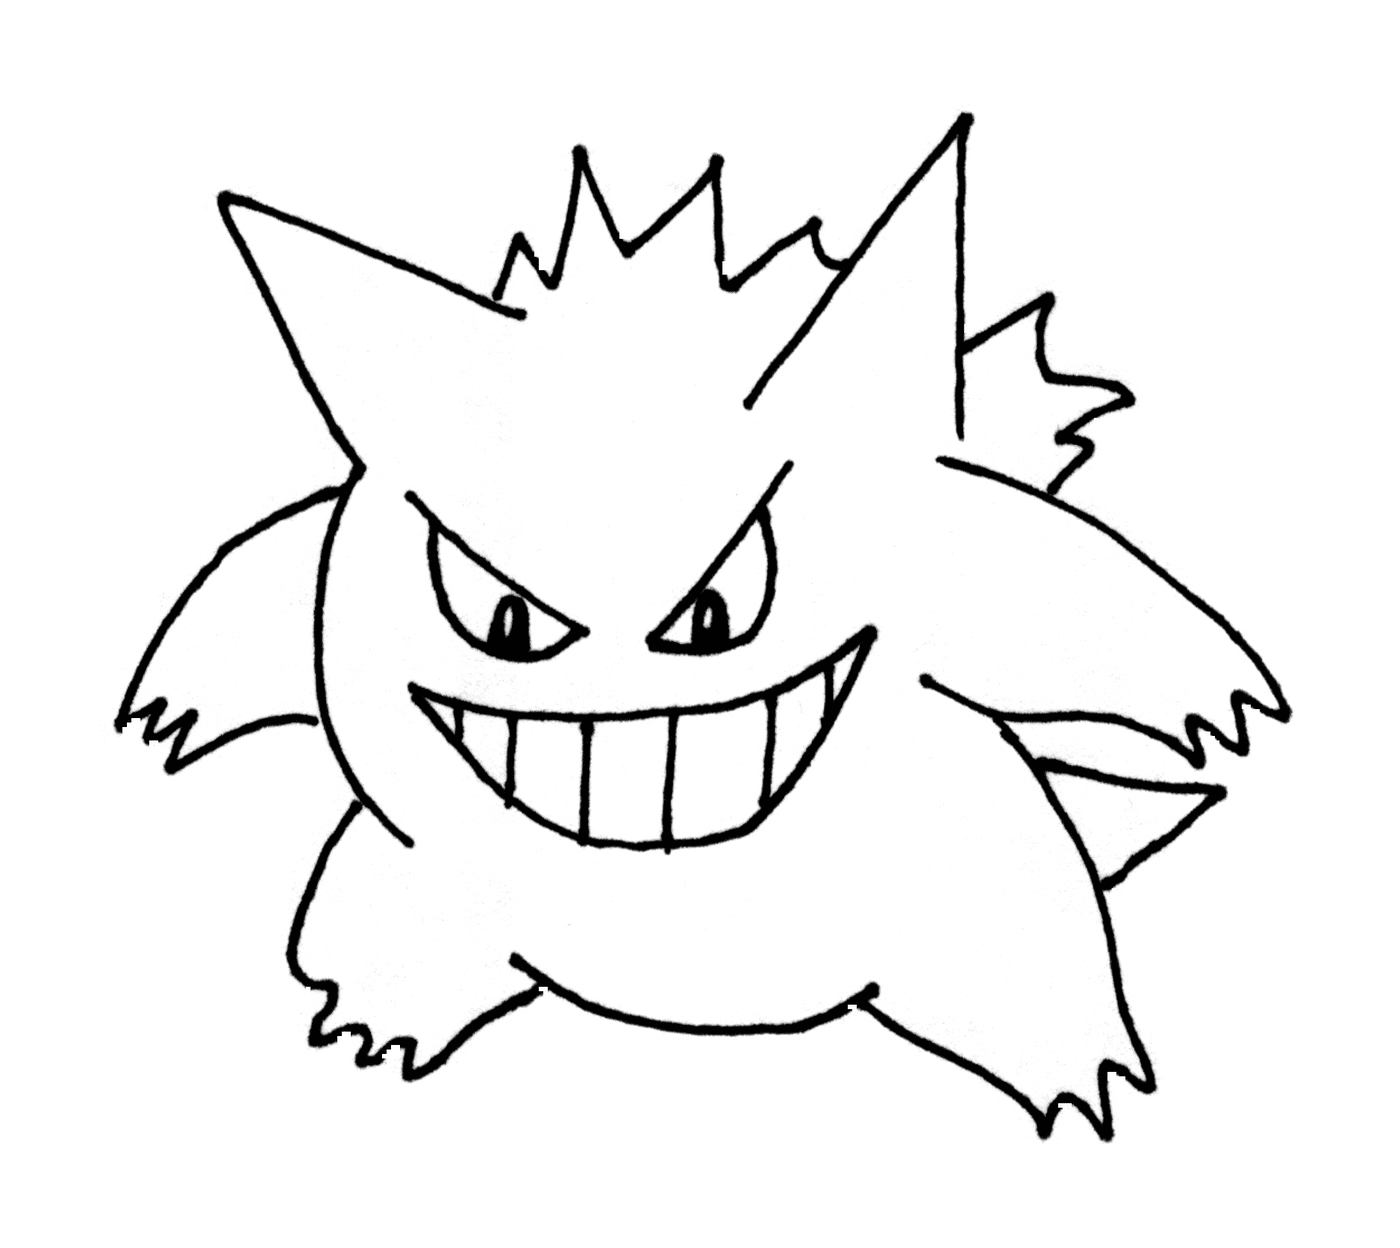  Gengar : Pokémon drawn in black 